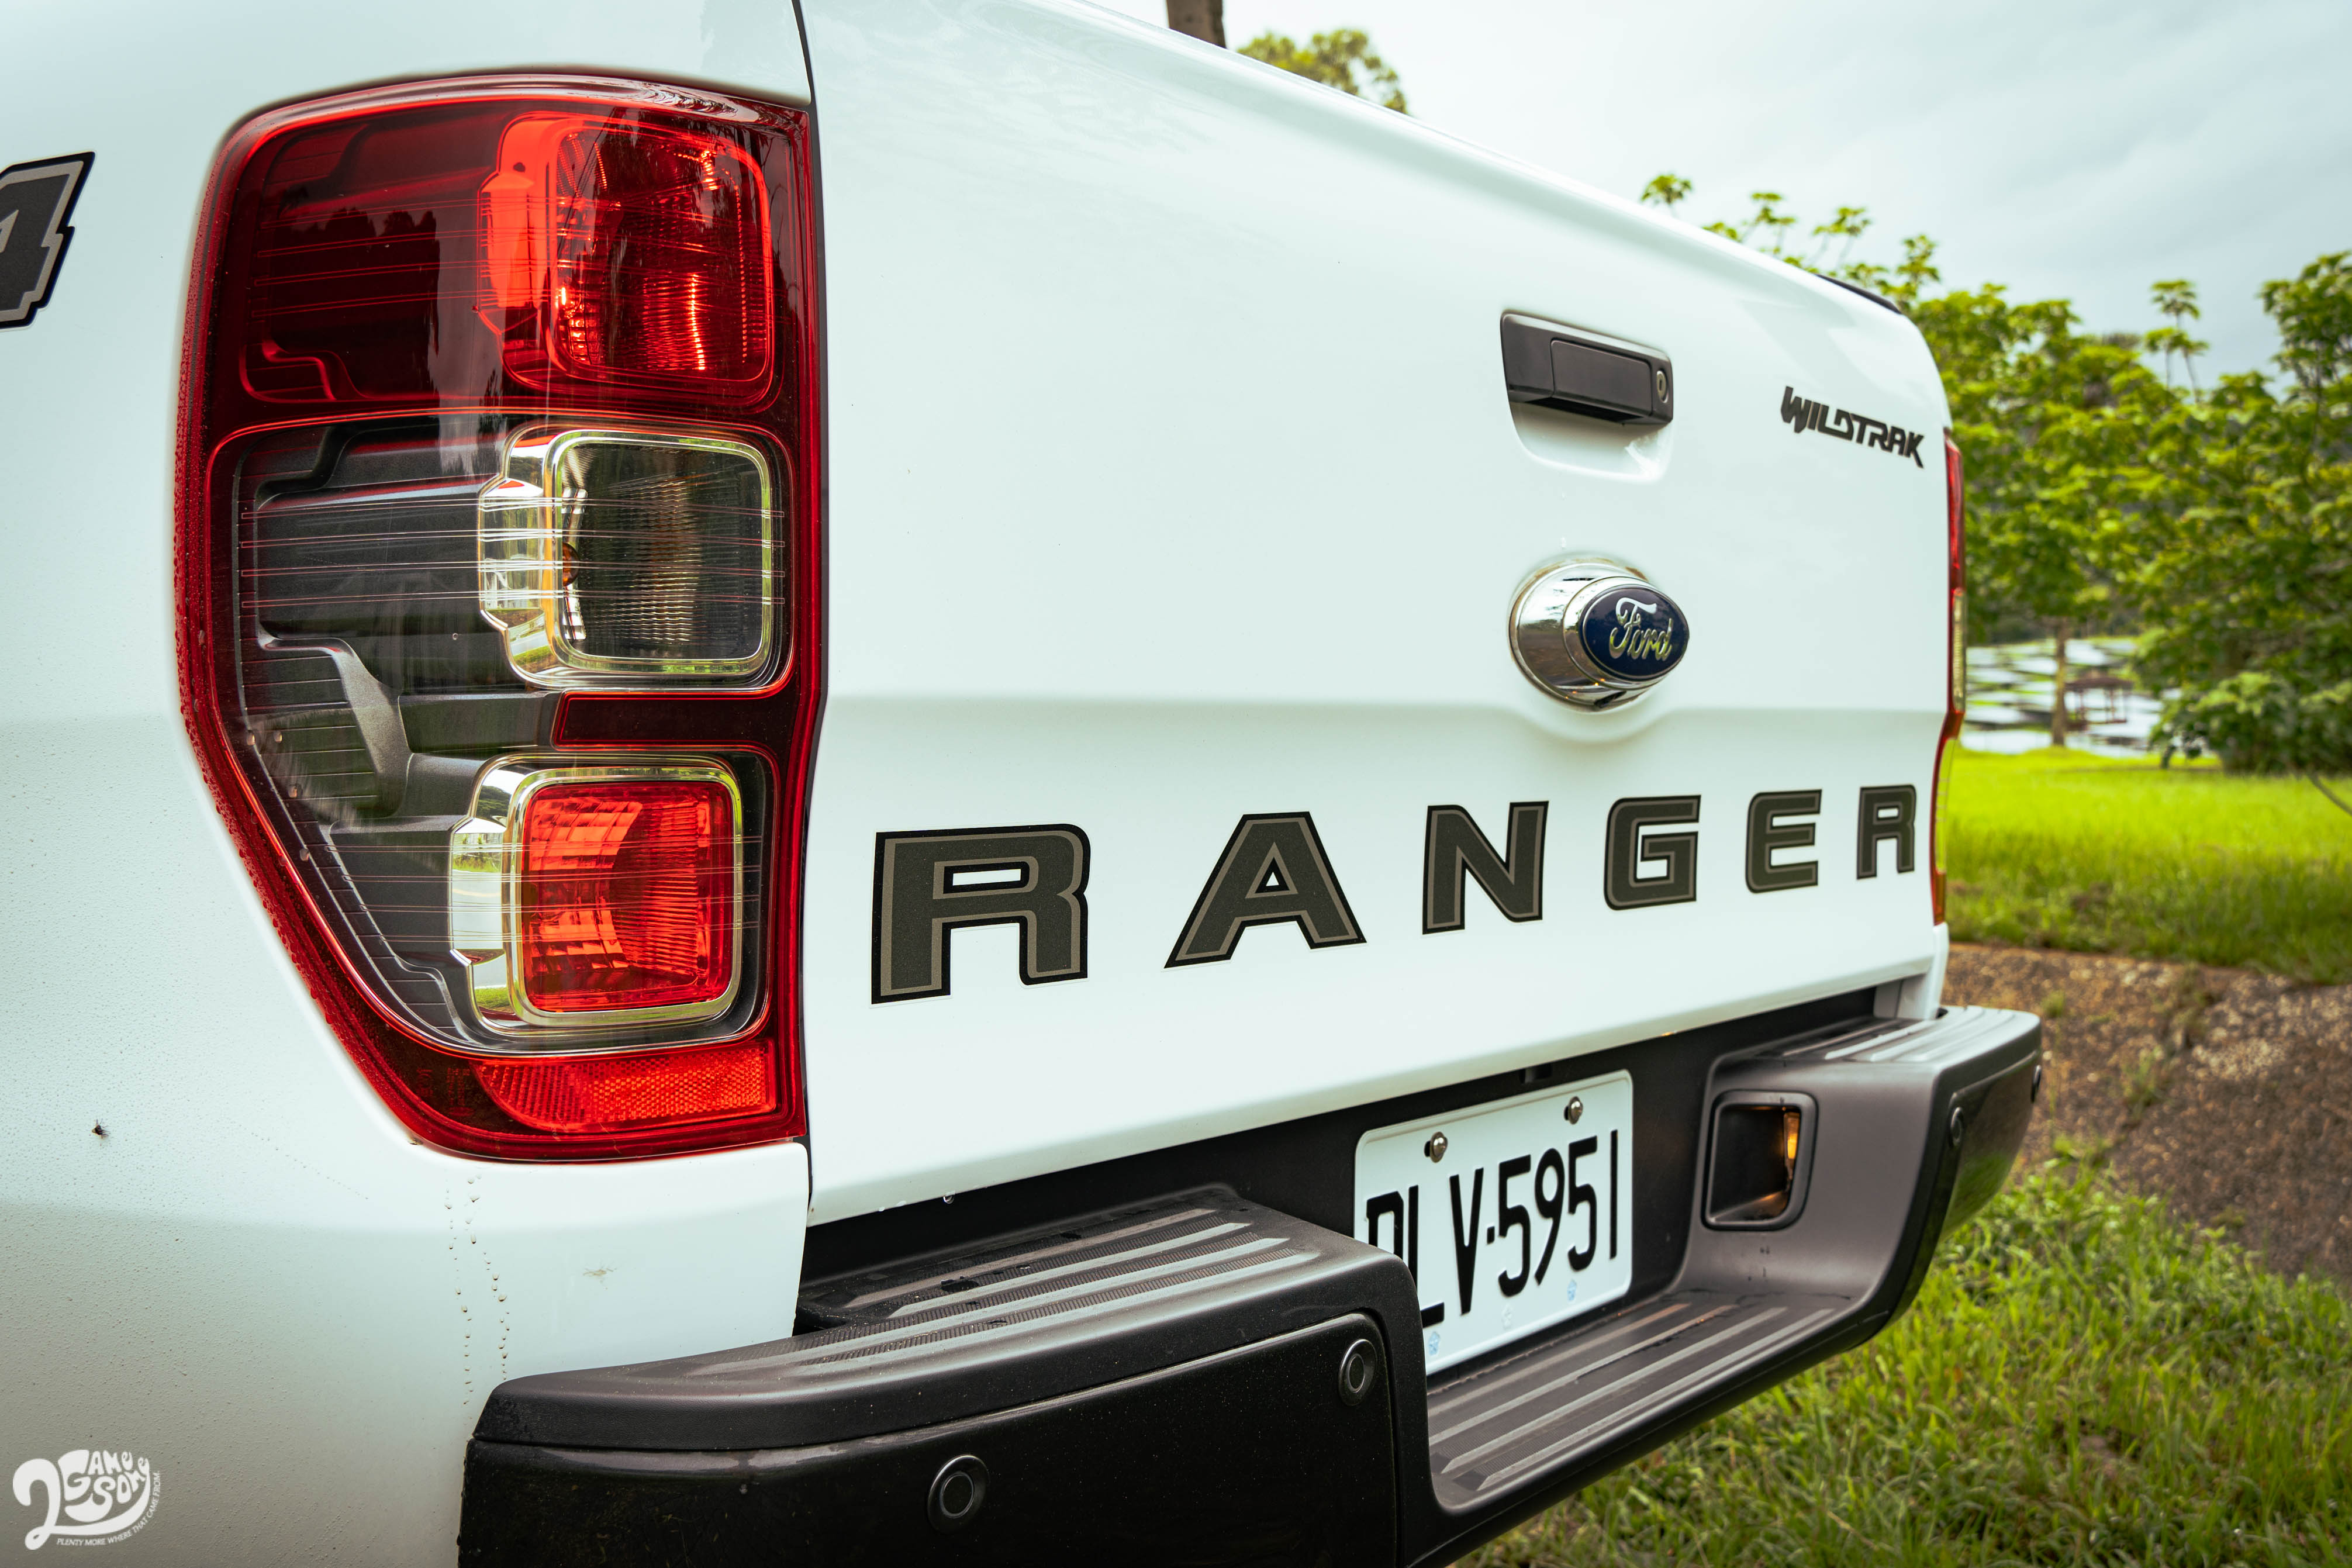 Ford Ranger 2021 年式由 104.8 萬的職人型、119.8 萬的全能型以及149.8 萬的運動型組成。